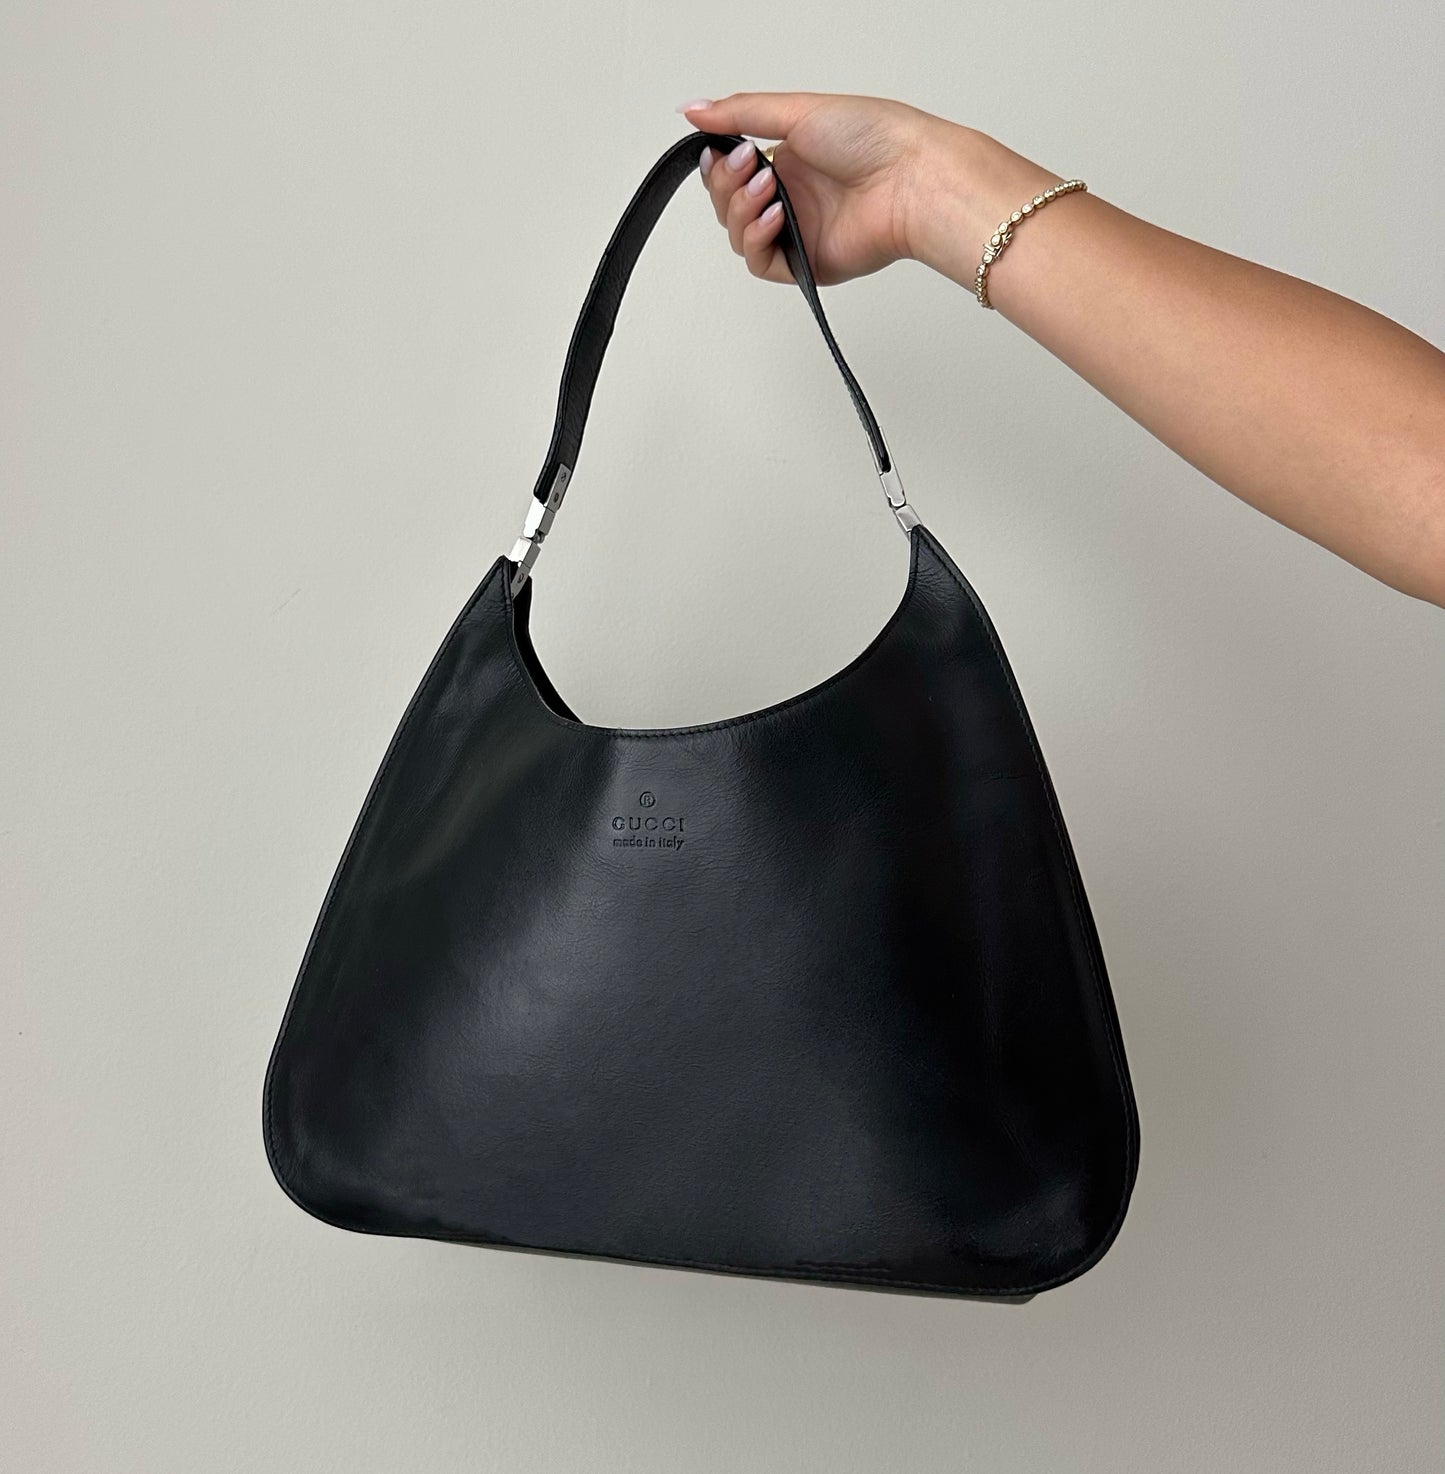 Gucci Black Leather Classic Shoulder Bag